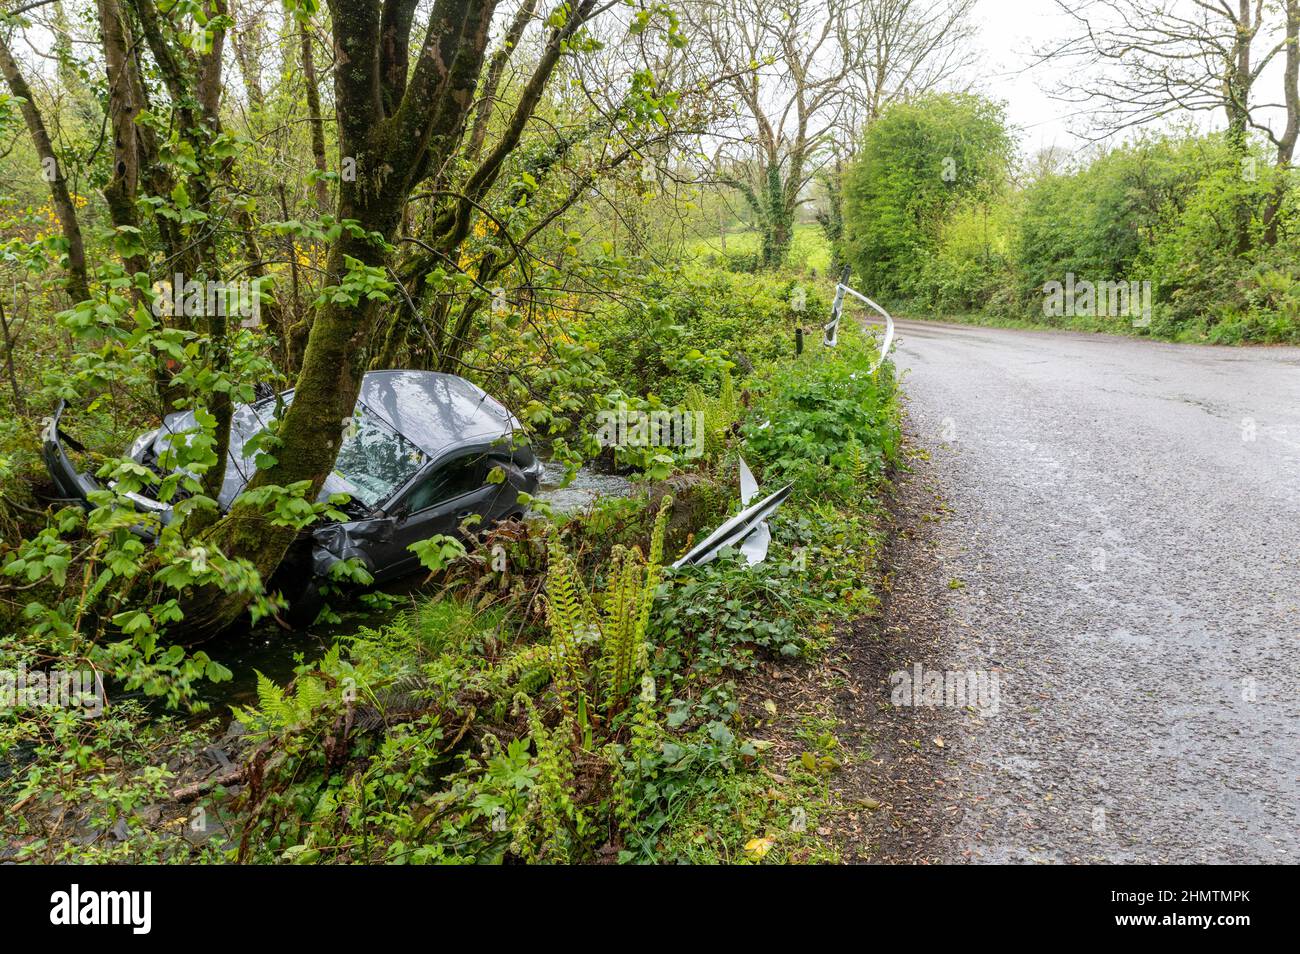 Car in ditch near Ballinspittle, Co. Cork Picture. John Allen Stock Photo